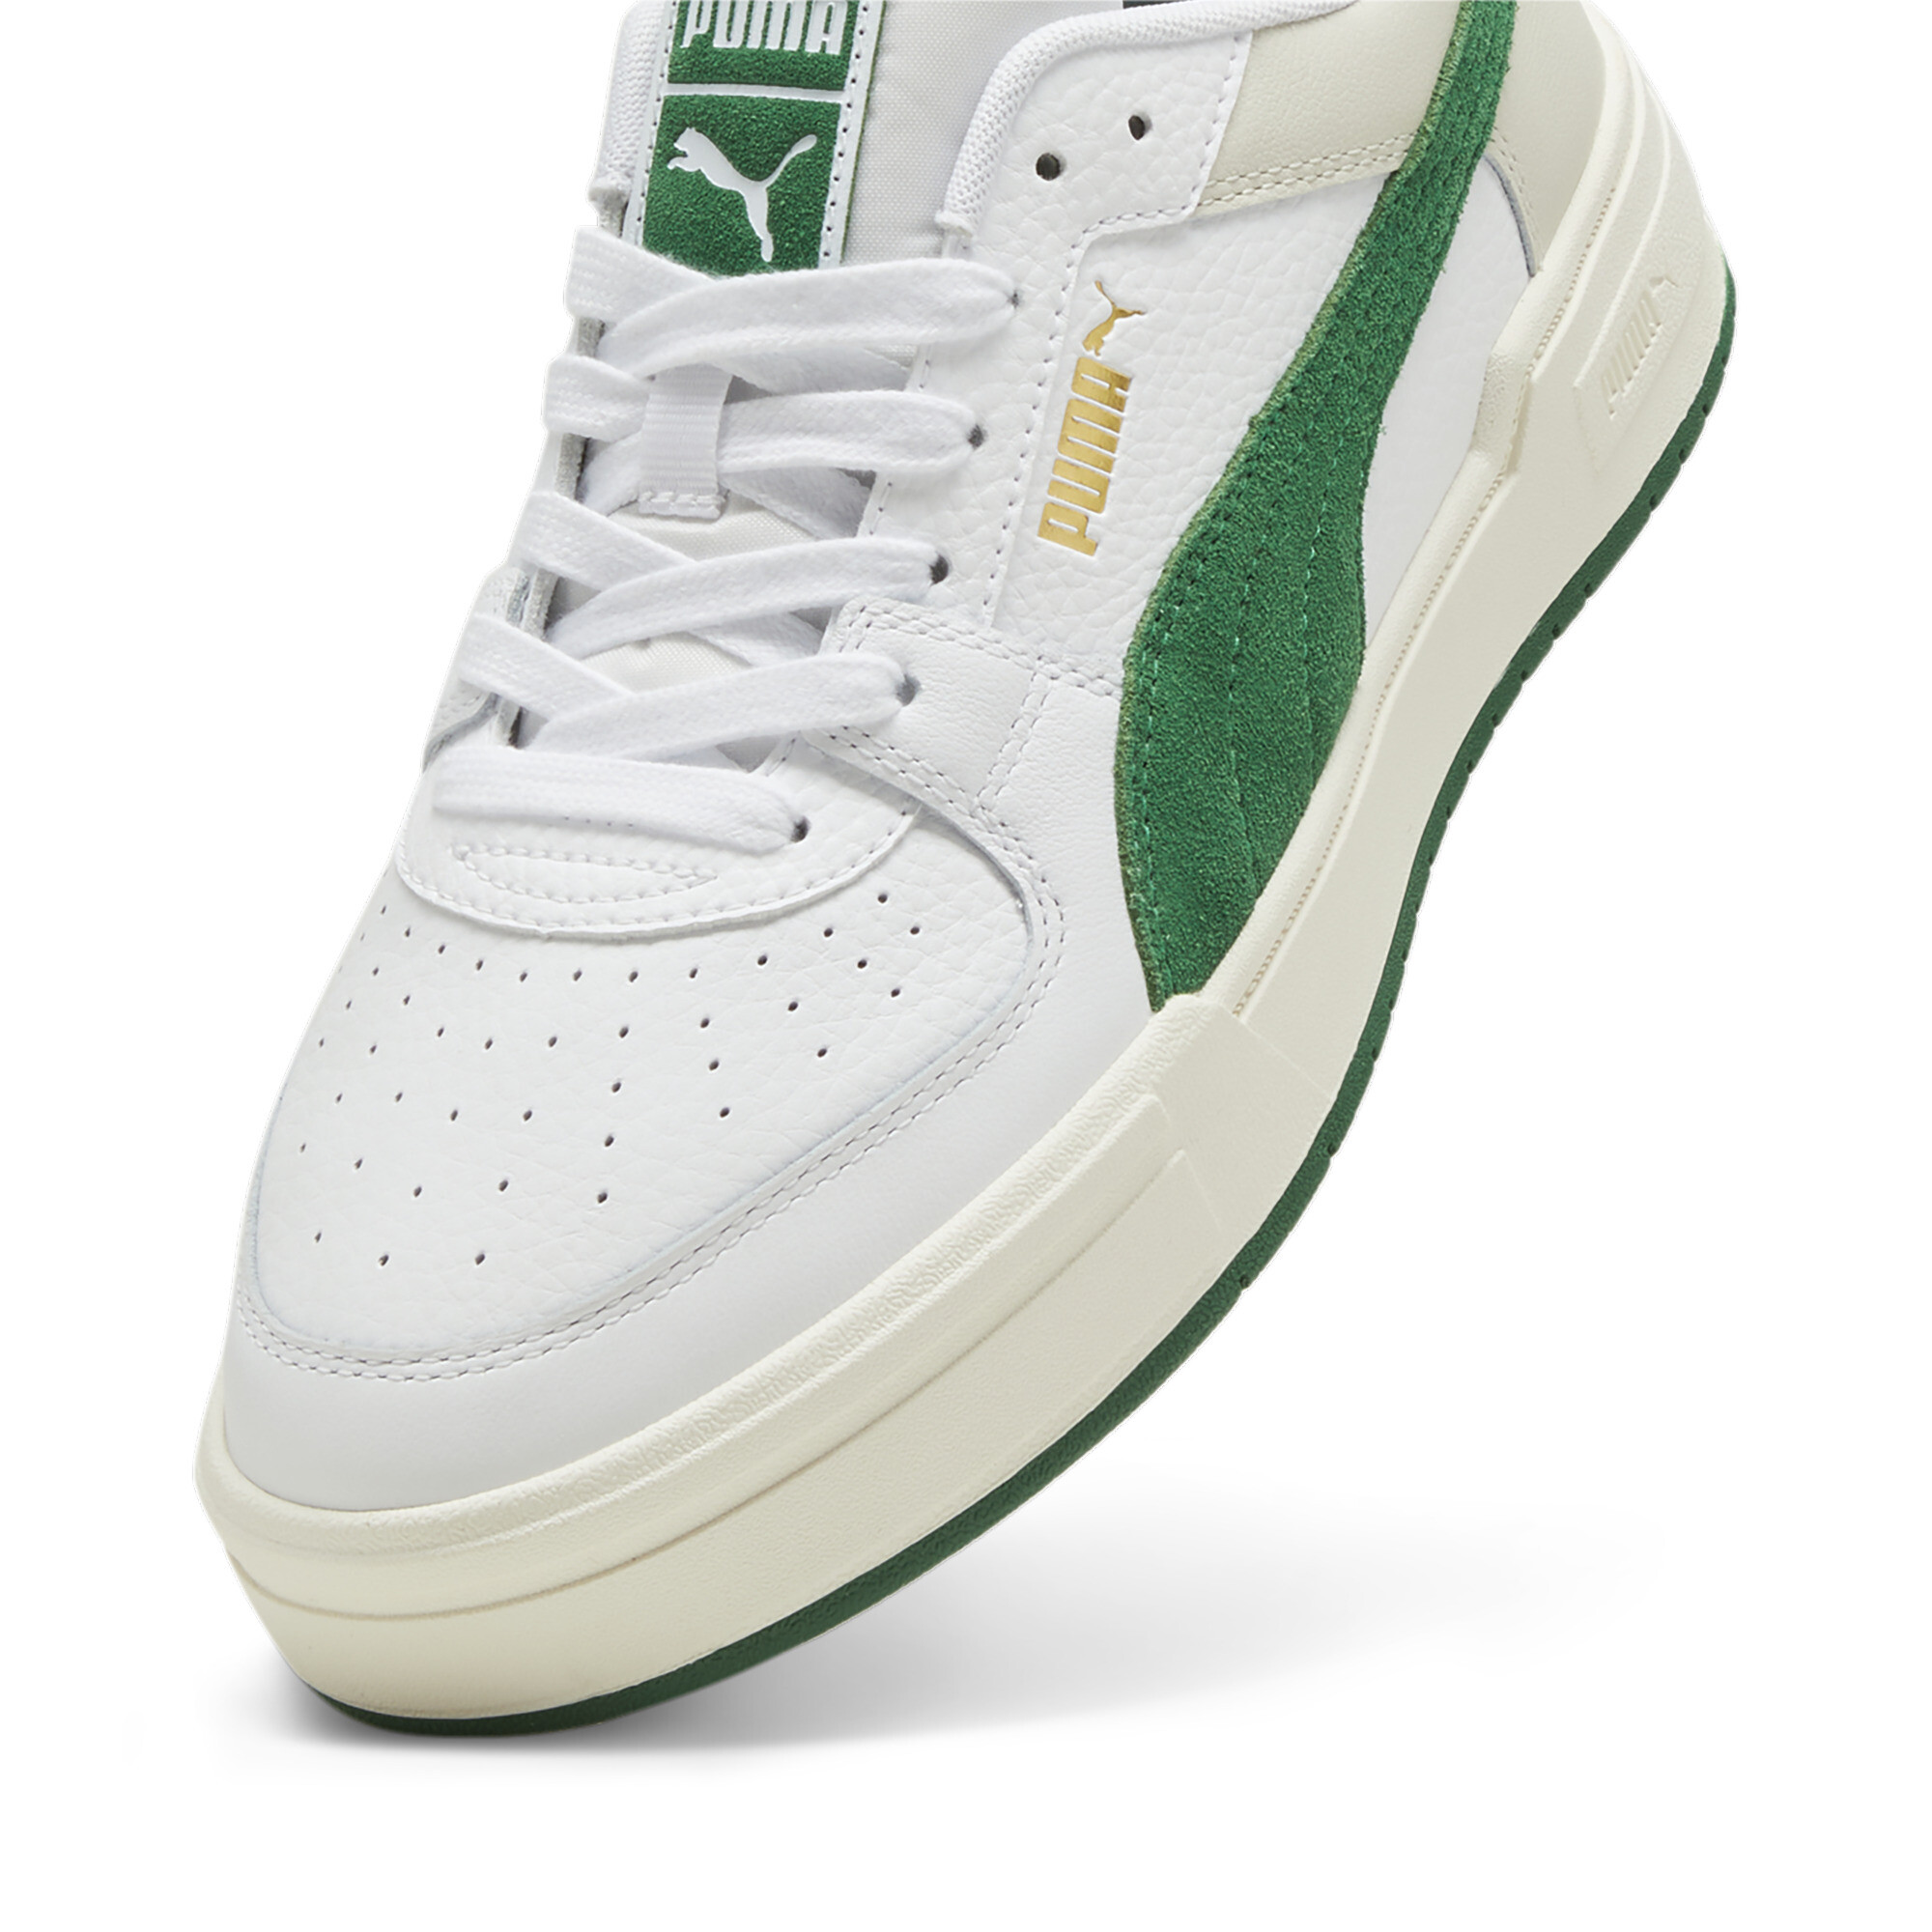 Men's PUMA CA Pro Suede FS Sneakers In White, Size EU 45